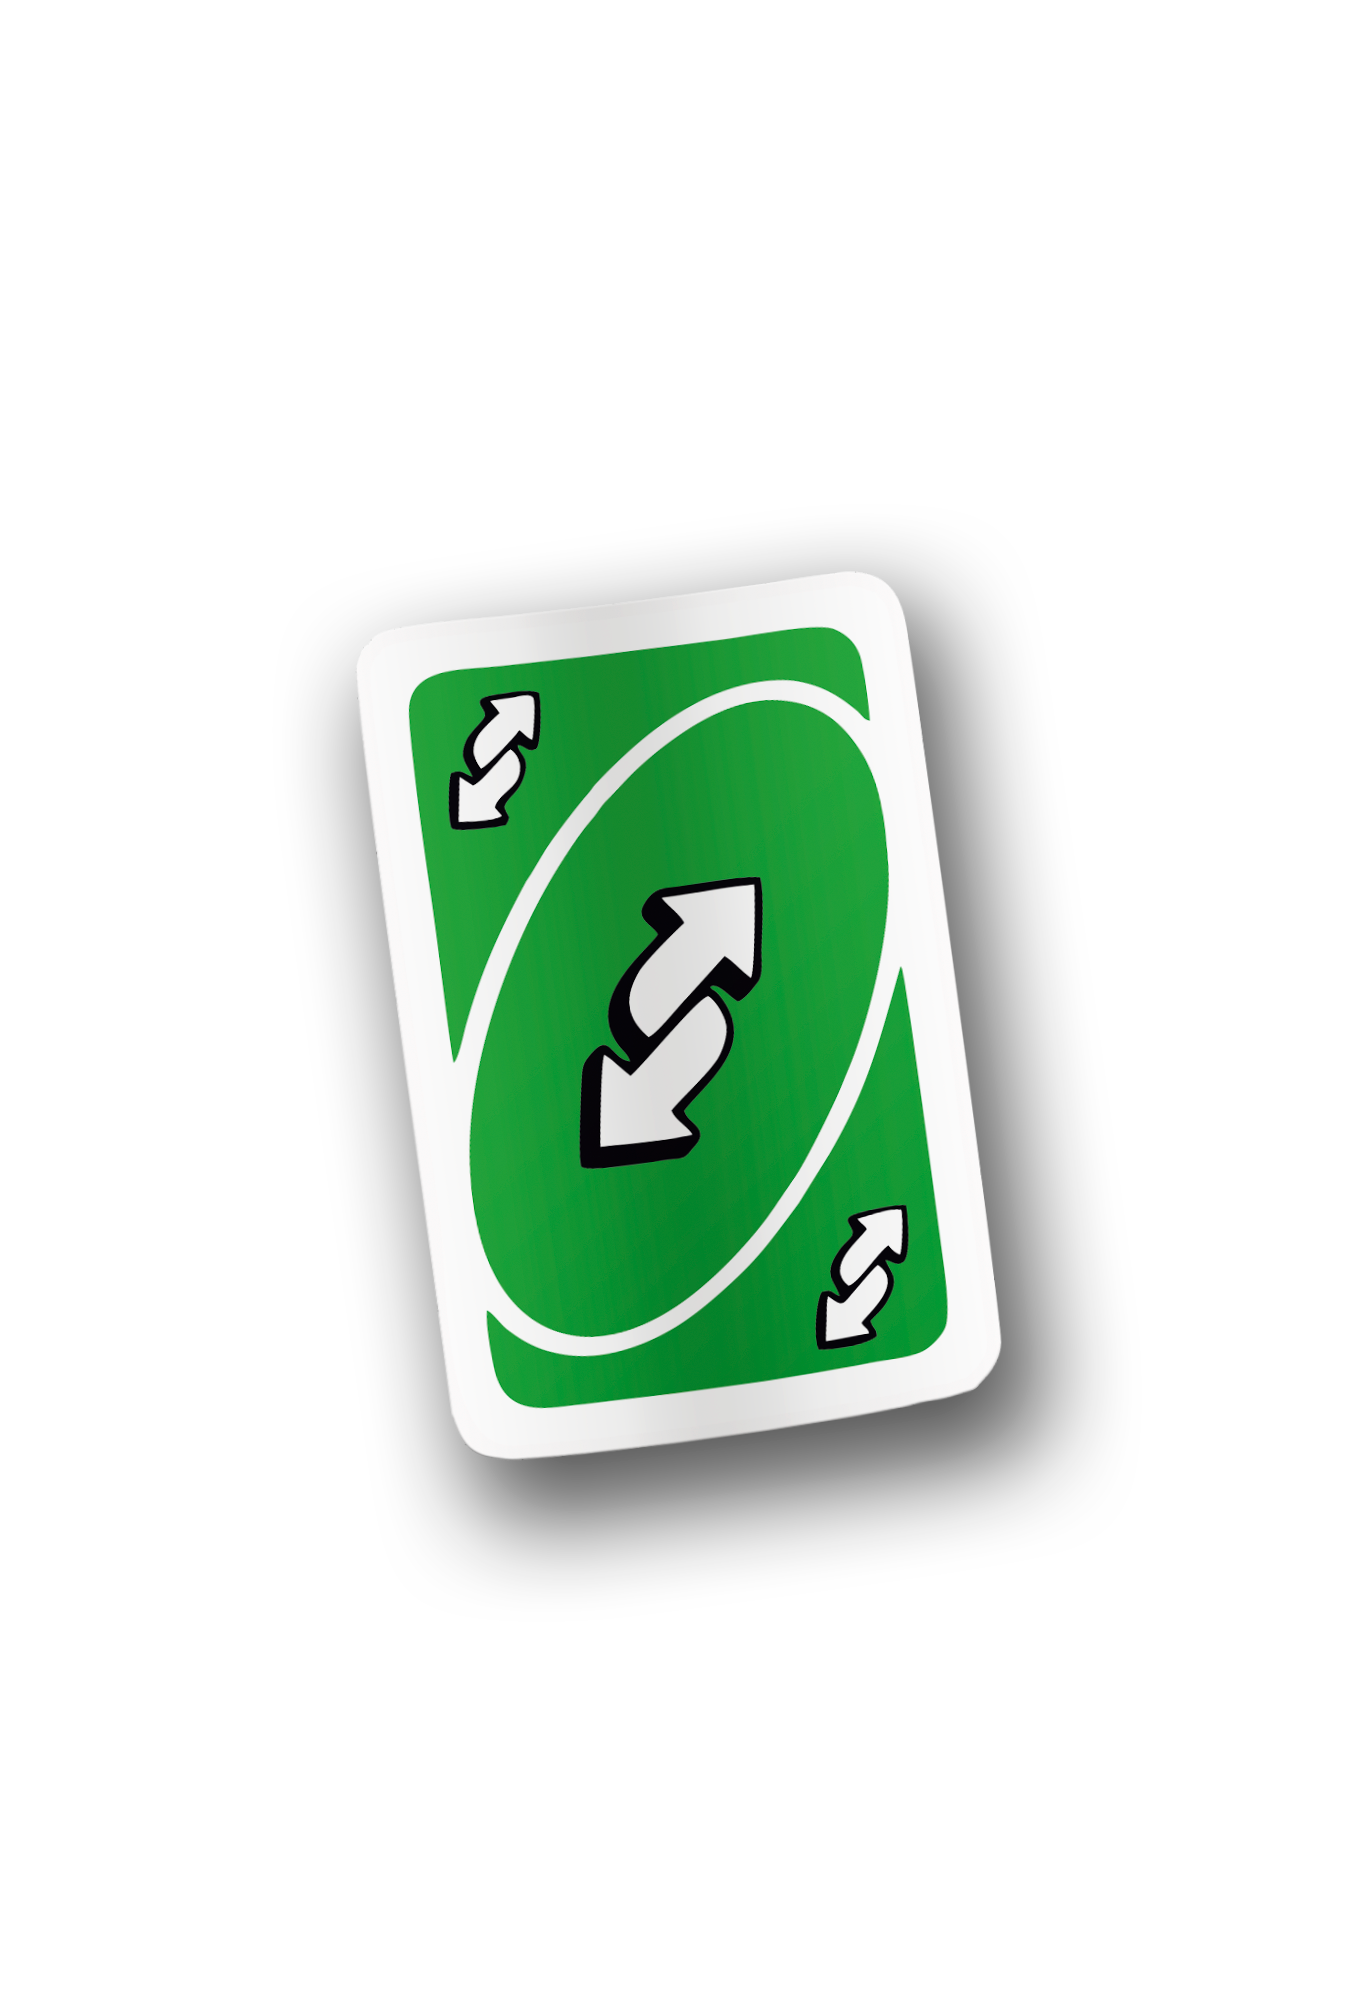 UNO reverse card - green | Sticker